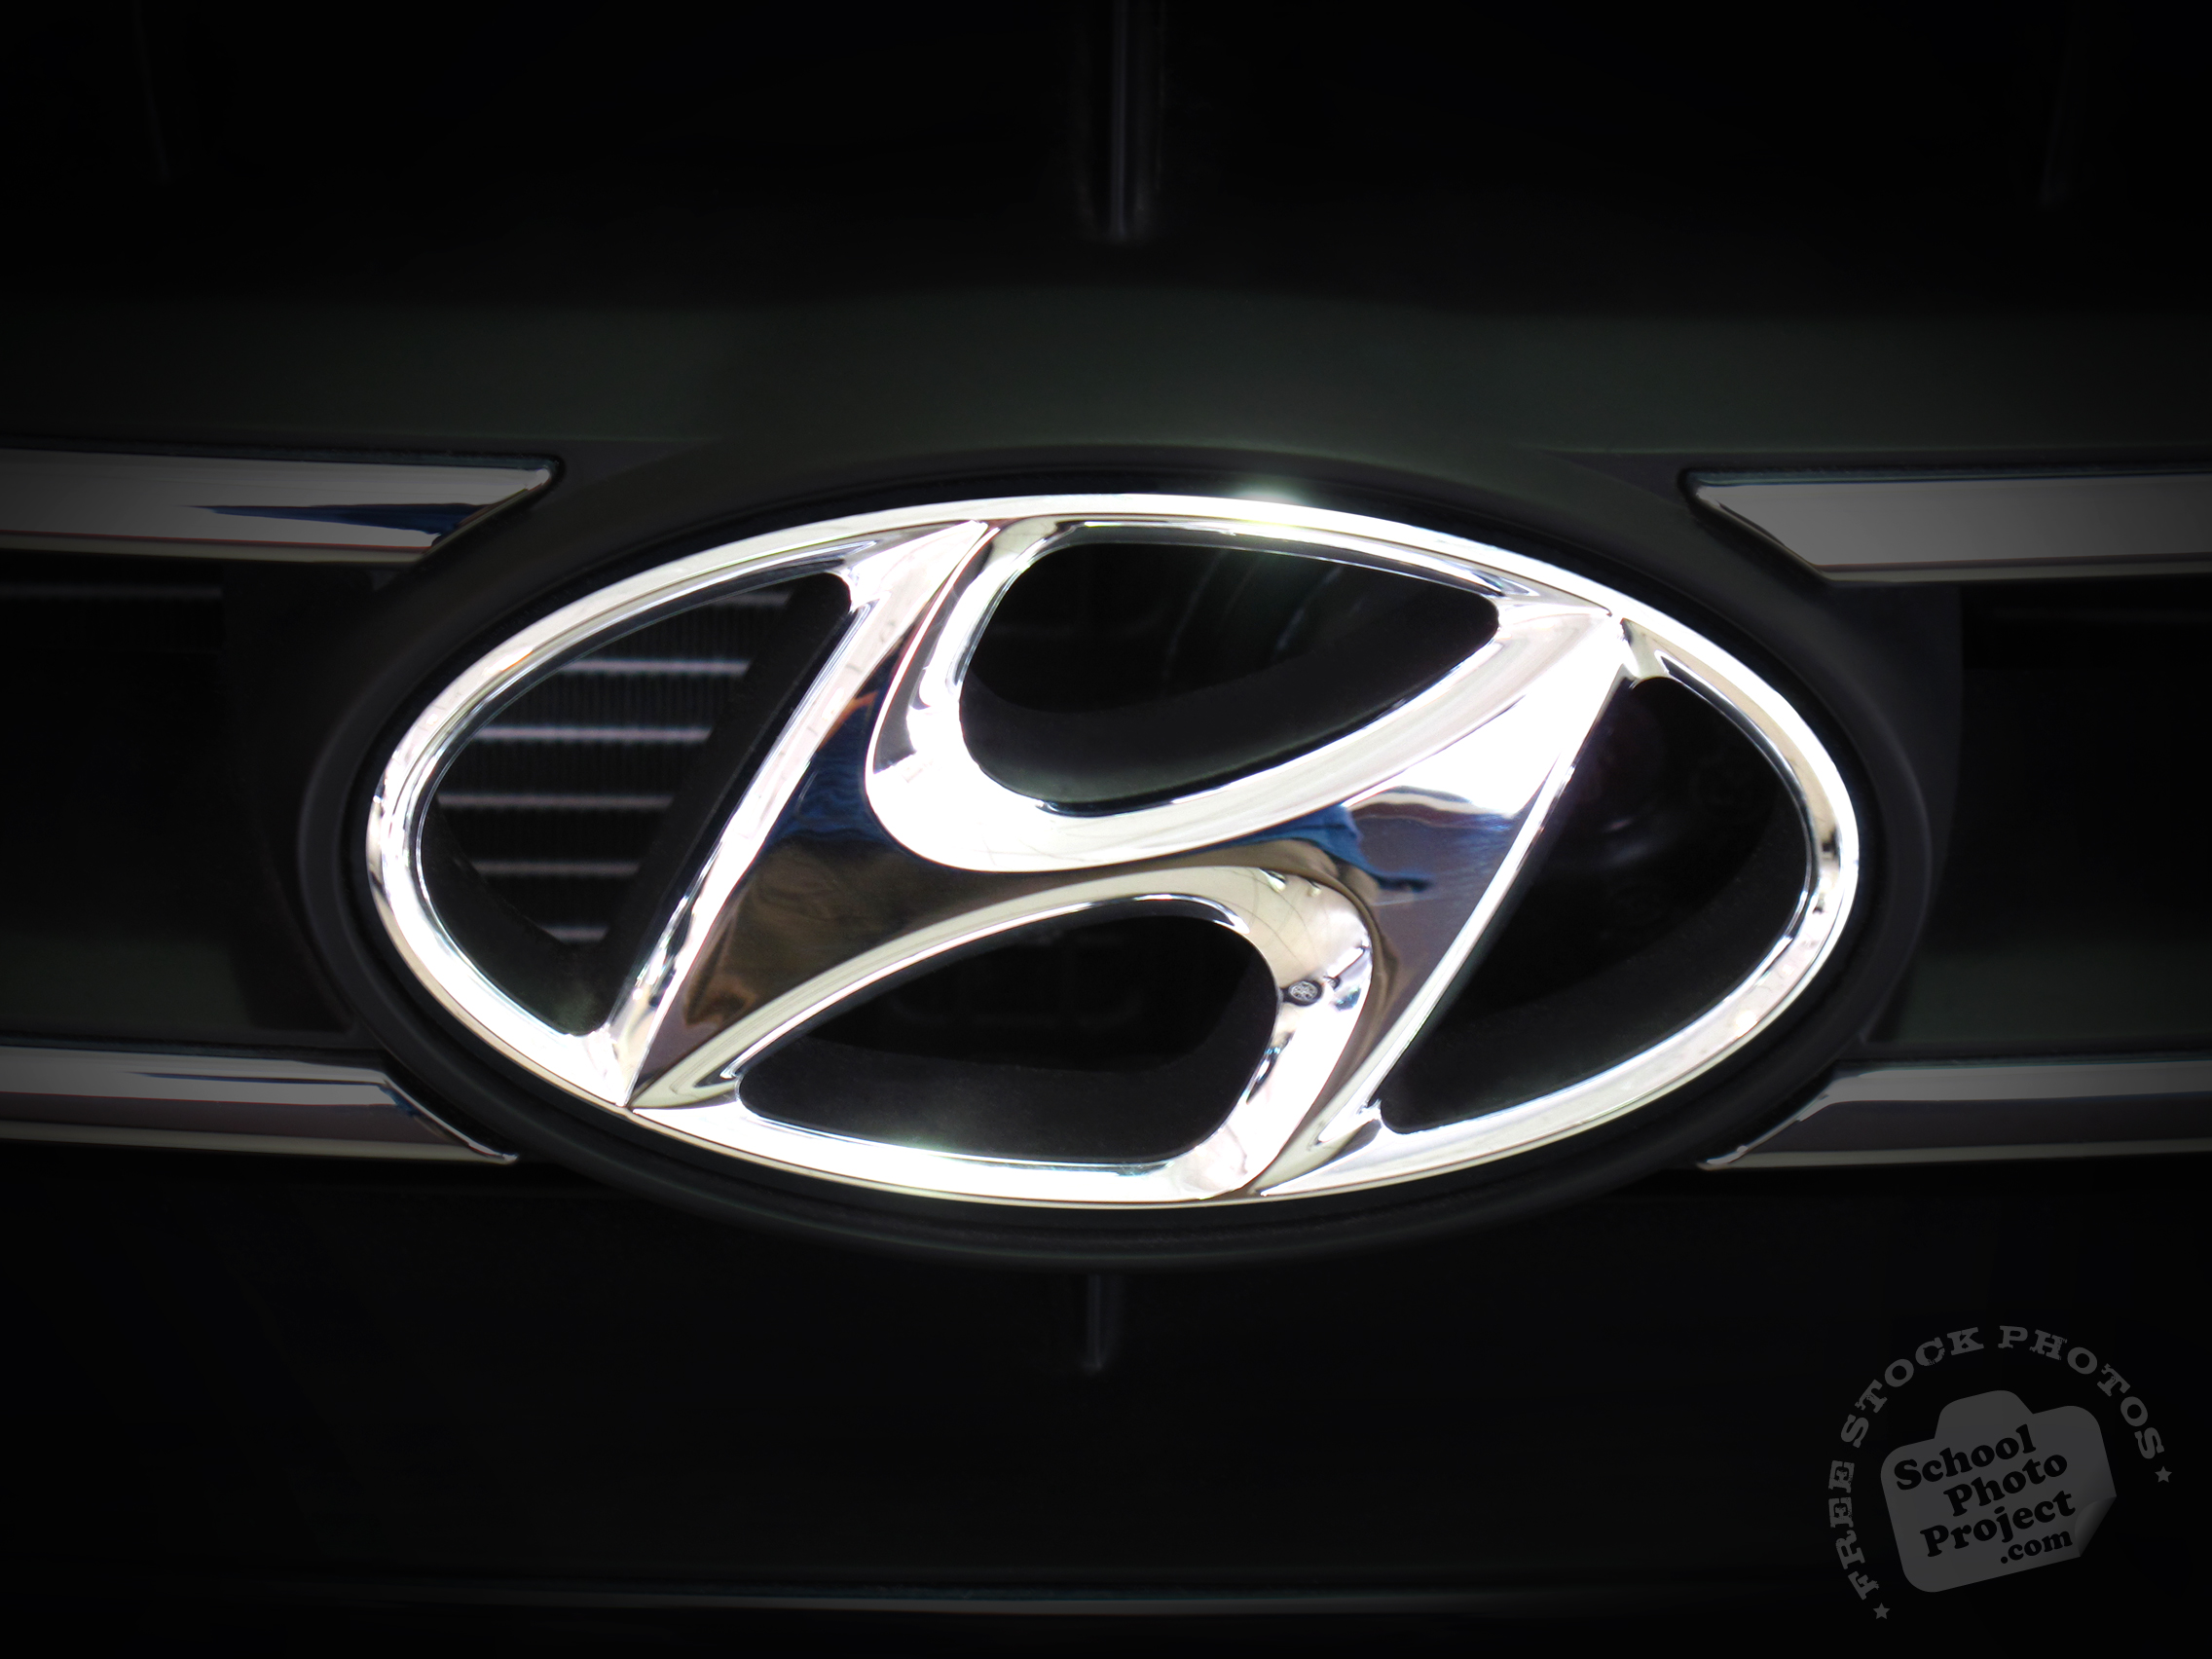 Hyundai Car Images Hd